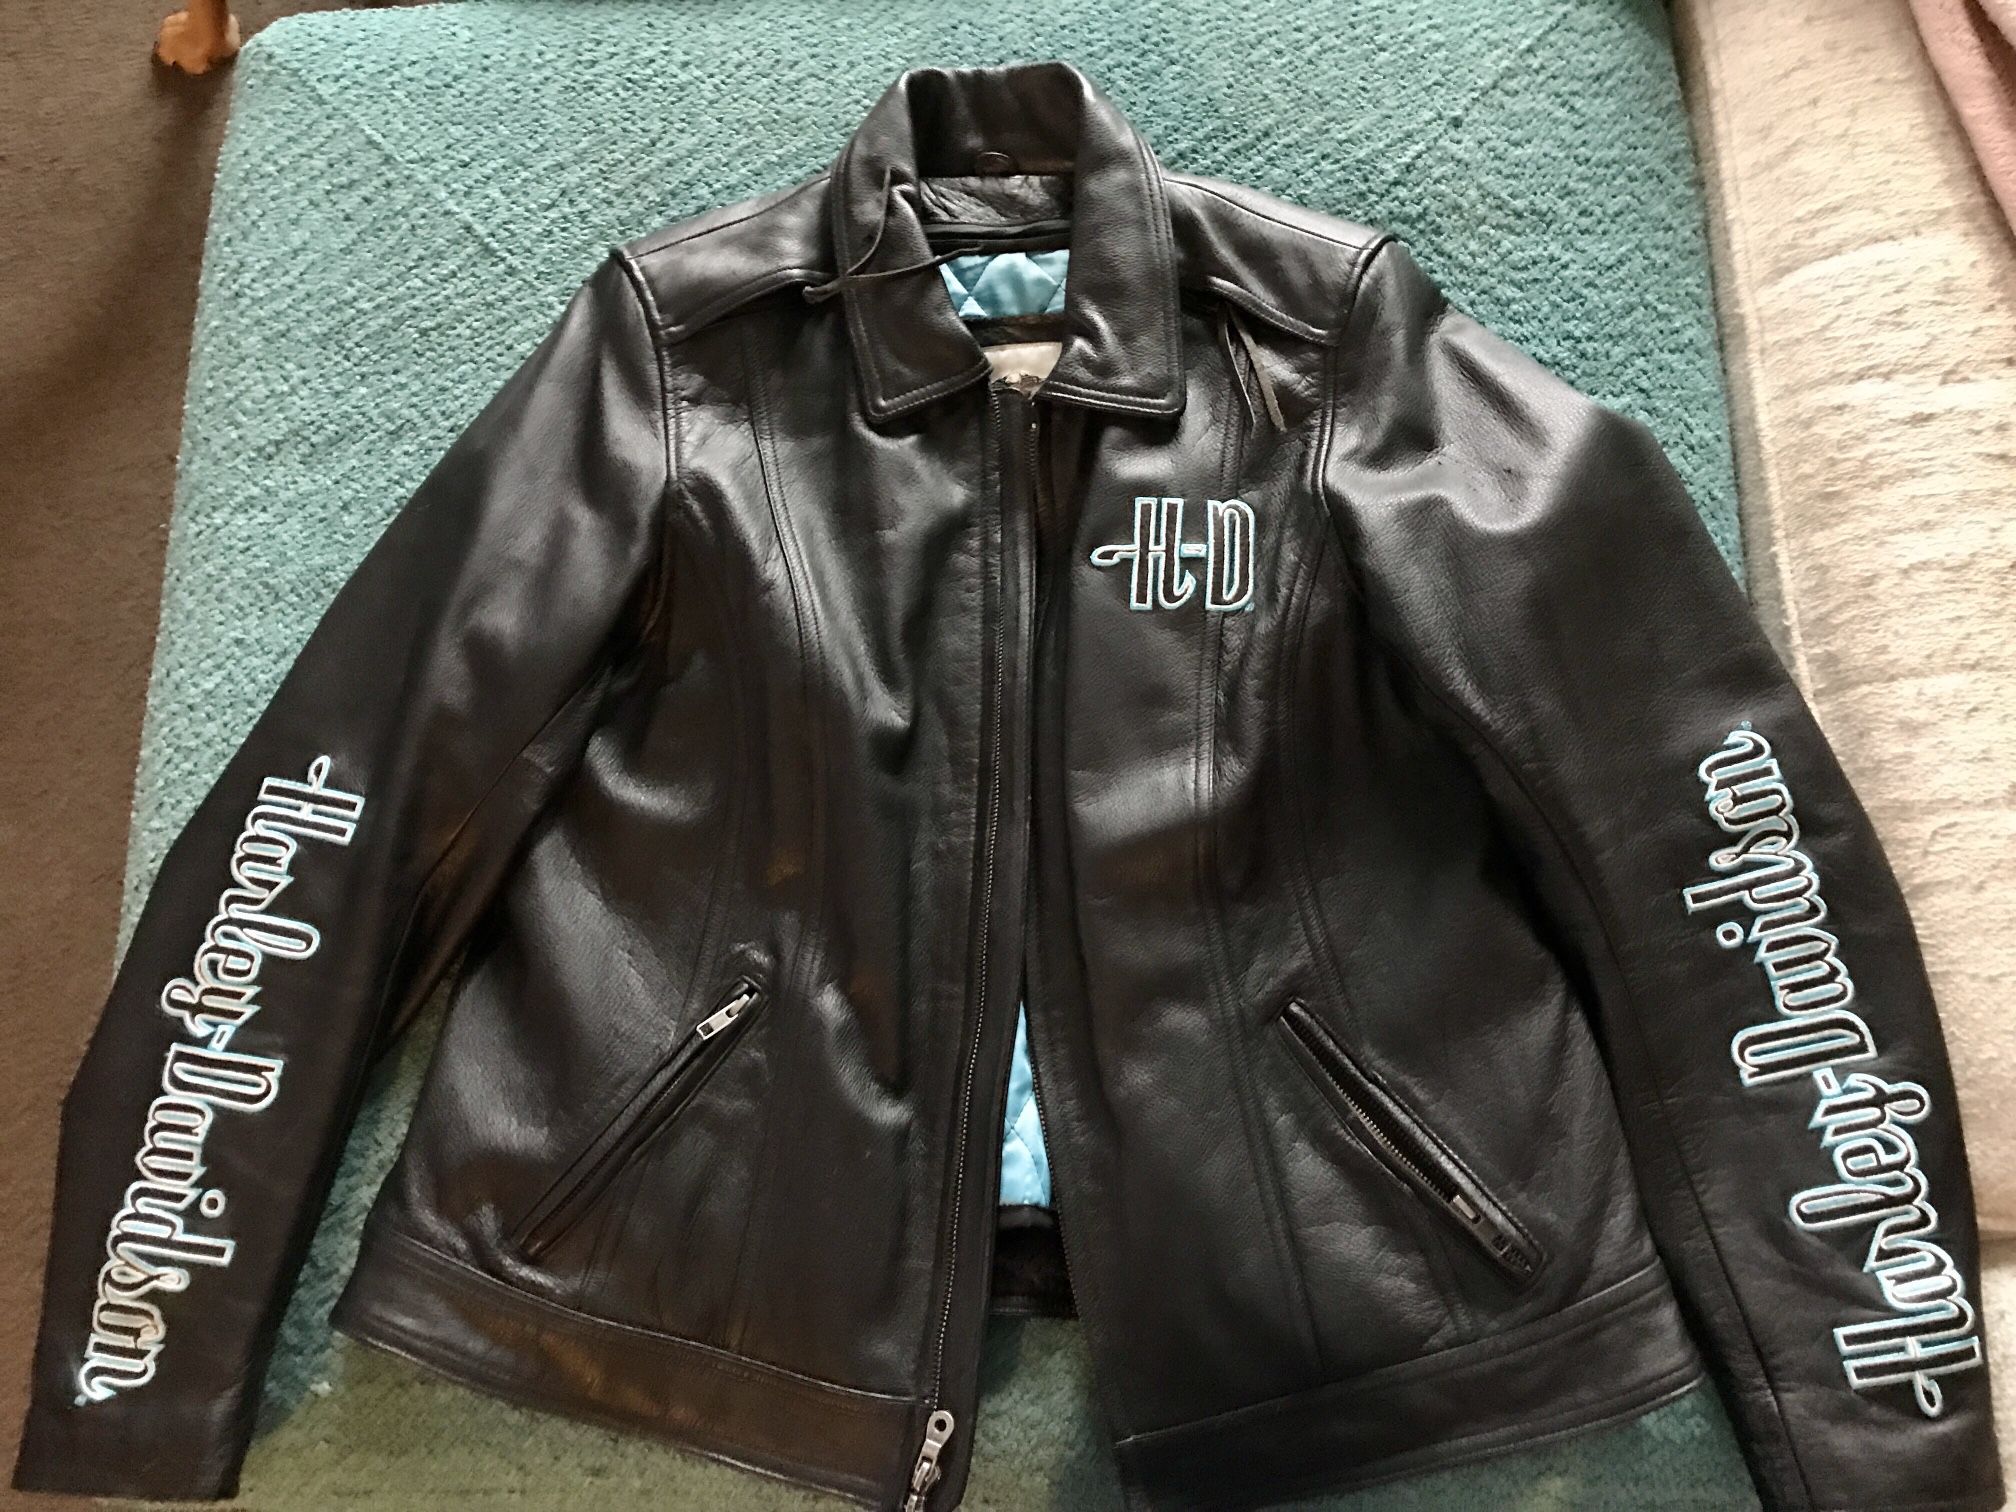 Ladie’s Harley Davidson Leather Jacket